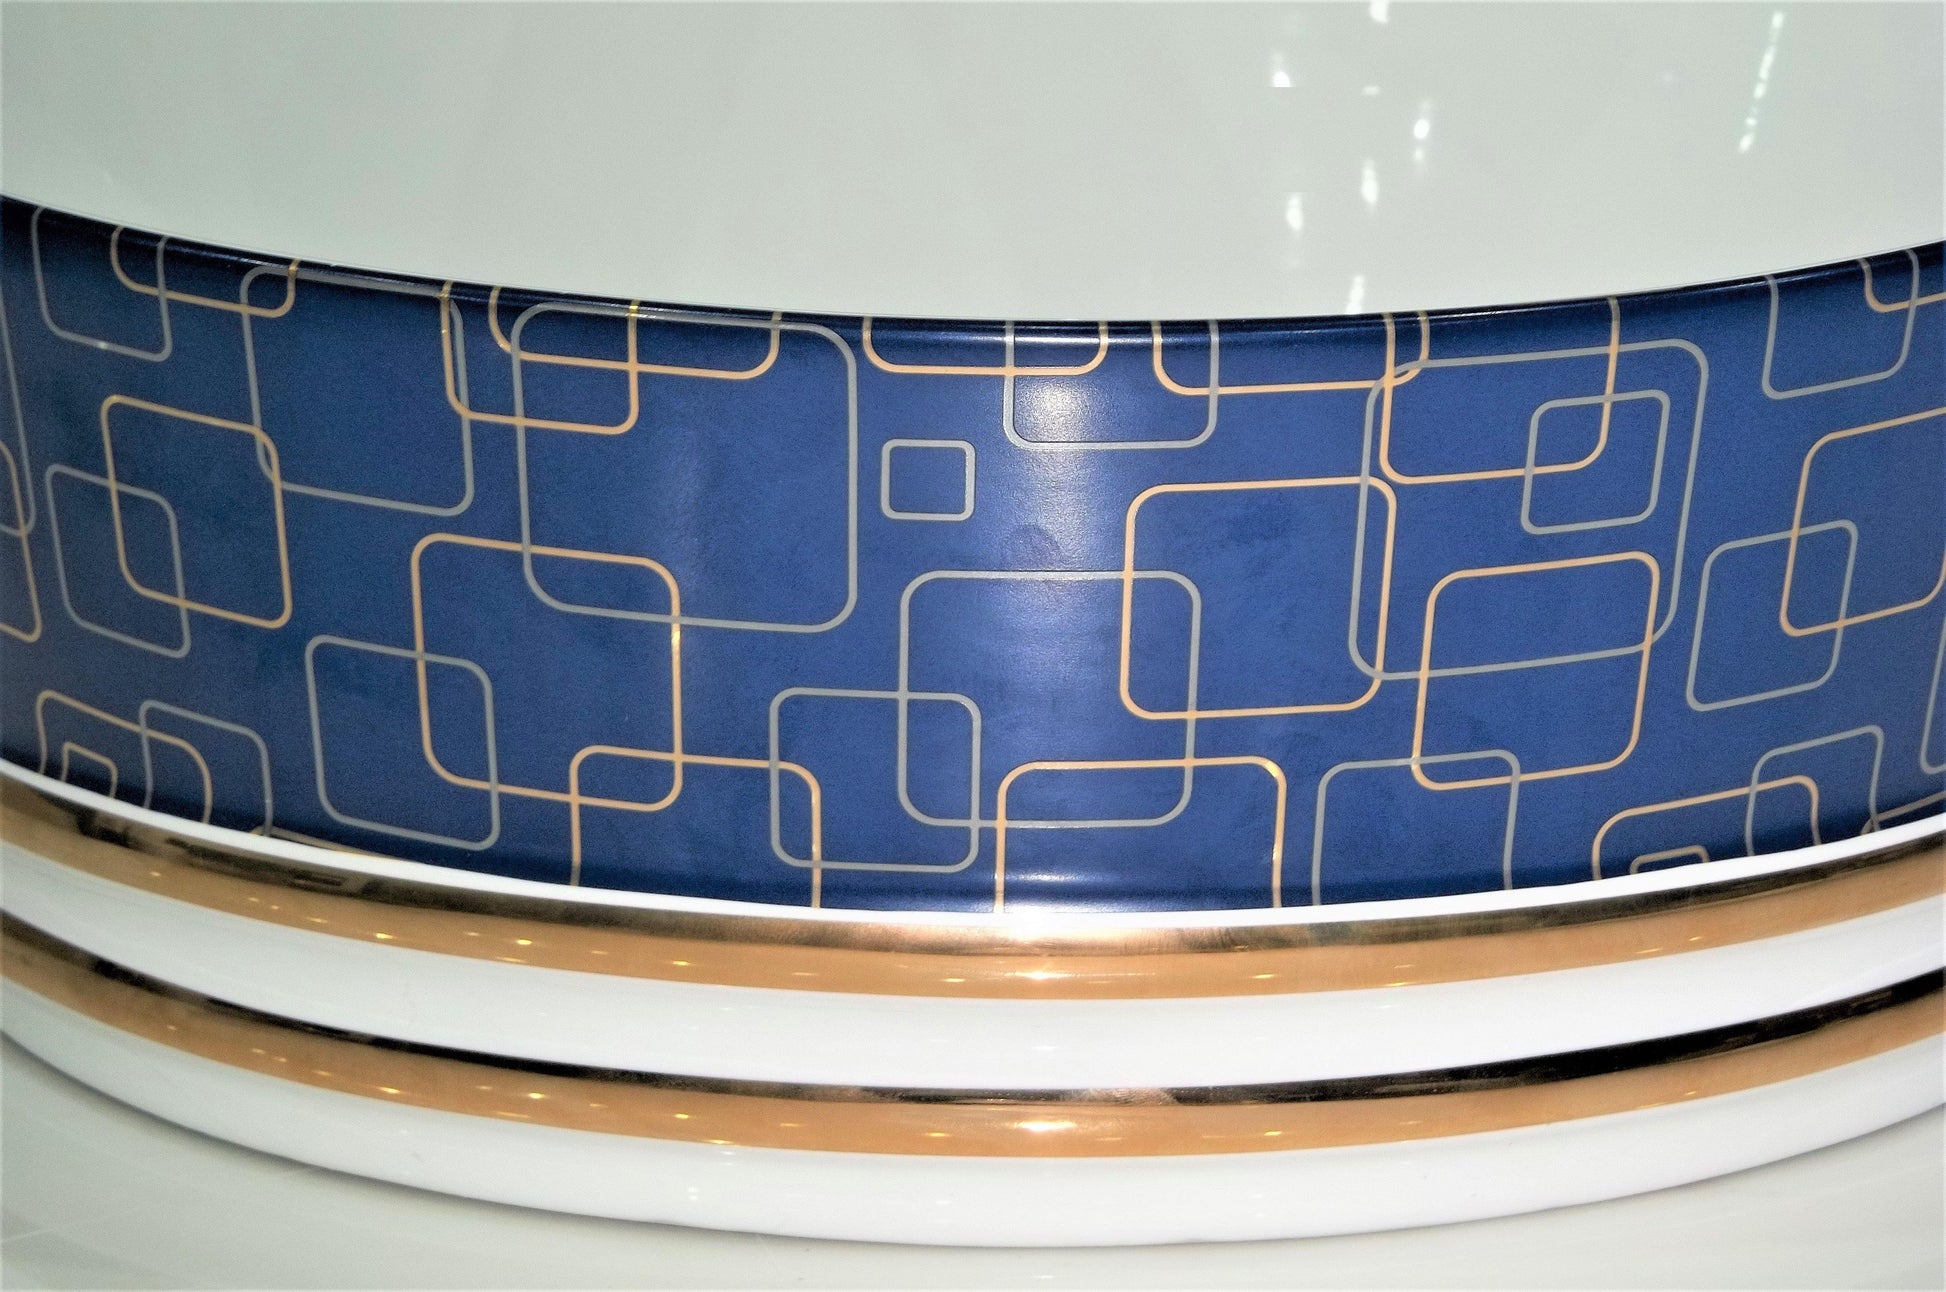 Table Top Premium Designer Ceramic Wash Basin/Vessel Round Blue White Designer for Bathroom 16 x 16 x 6 Inch (Blue Color) - Bath Outlet